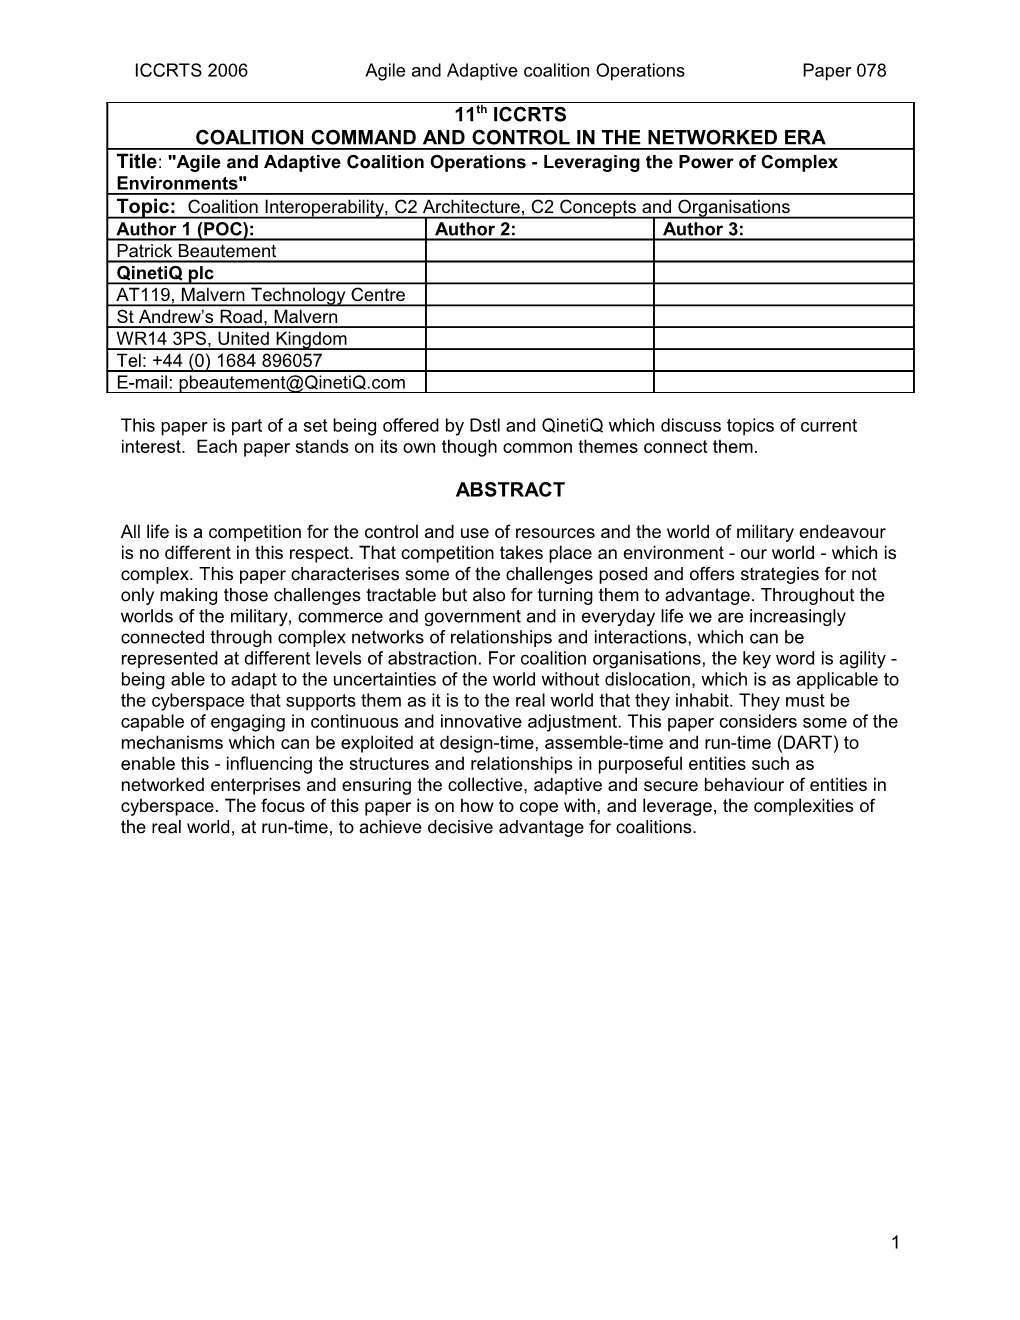 ICCRTS 2006 Agile and Adaptive Coalition Operations Paper 078